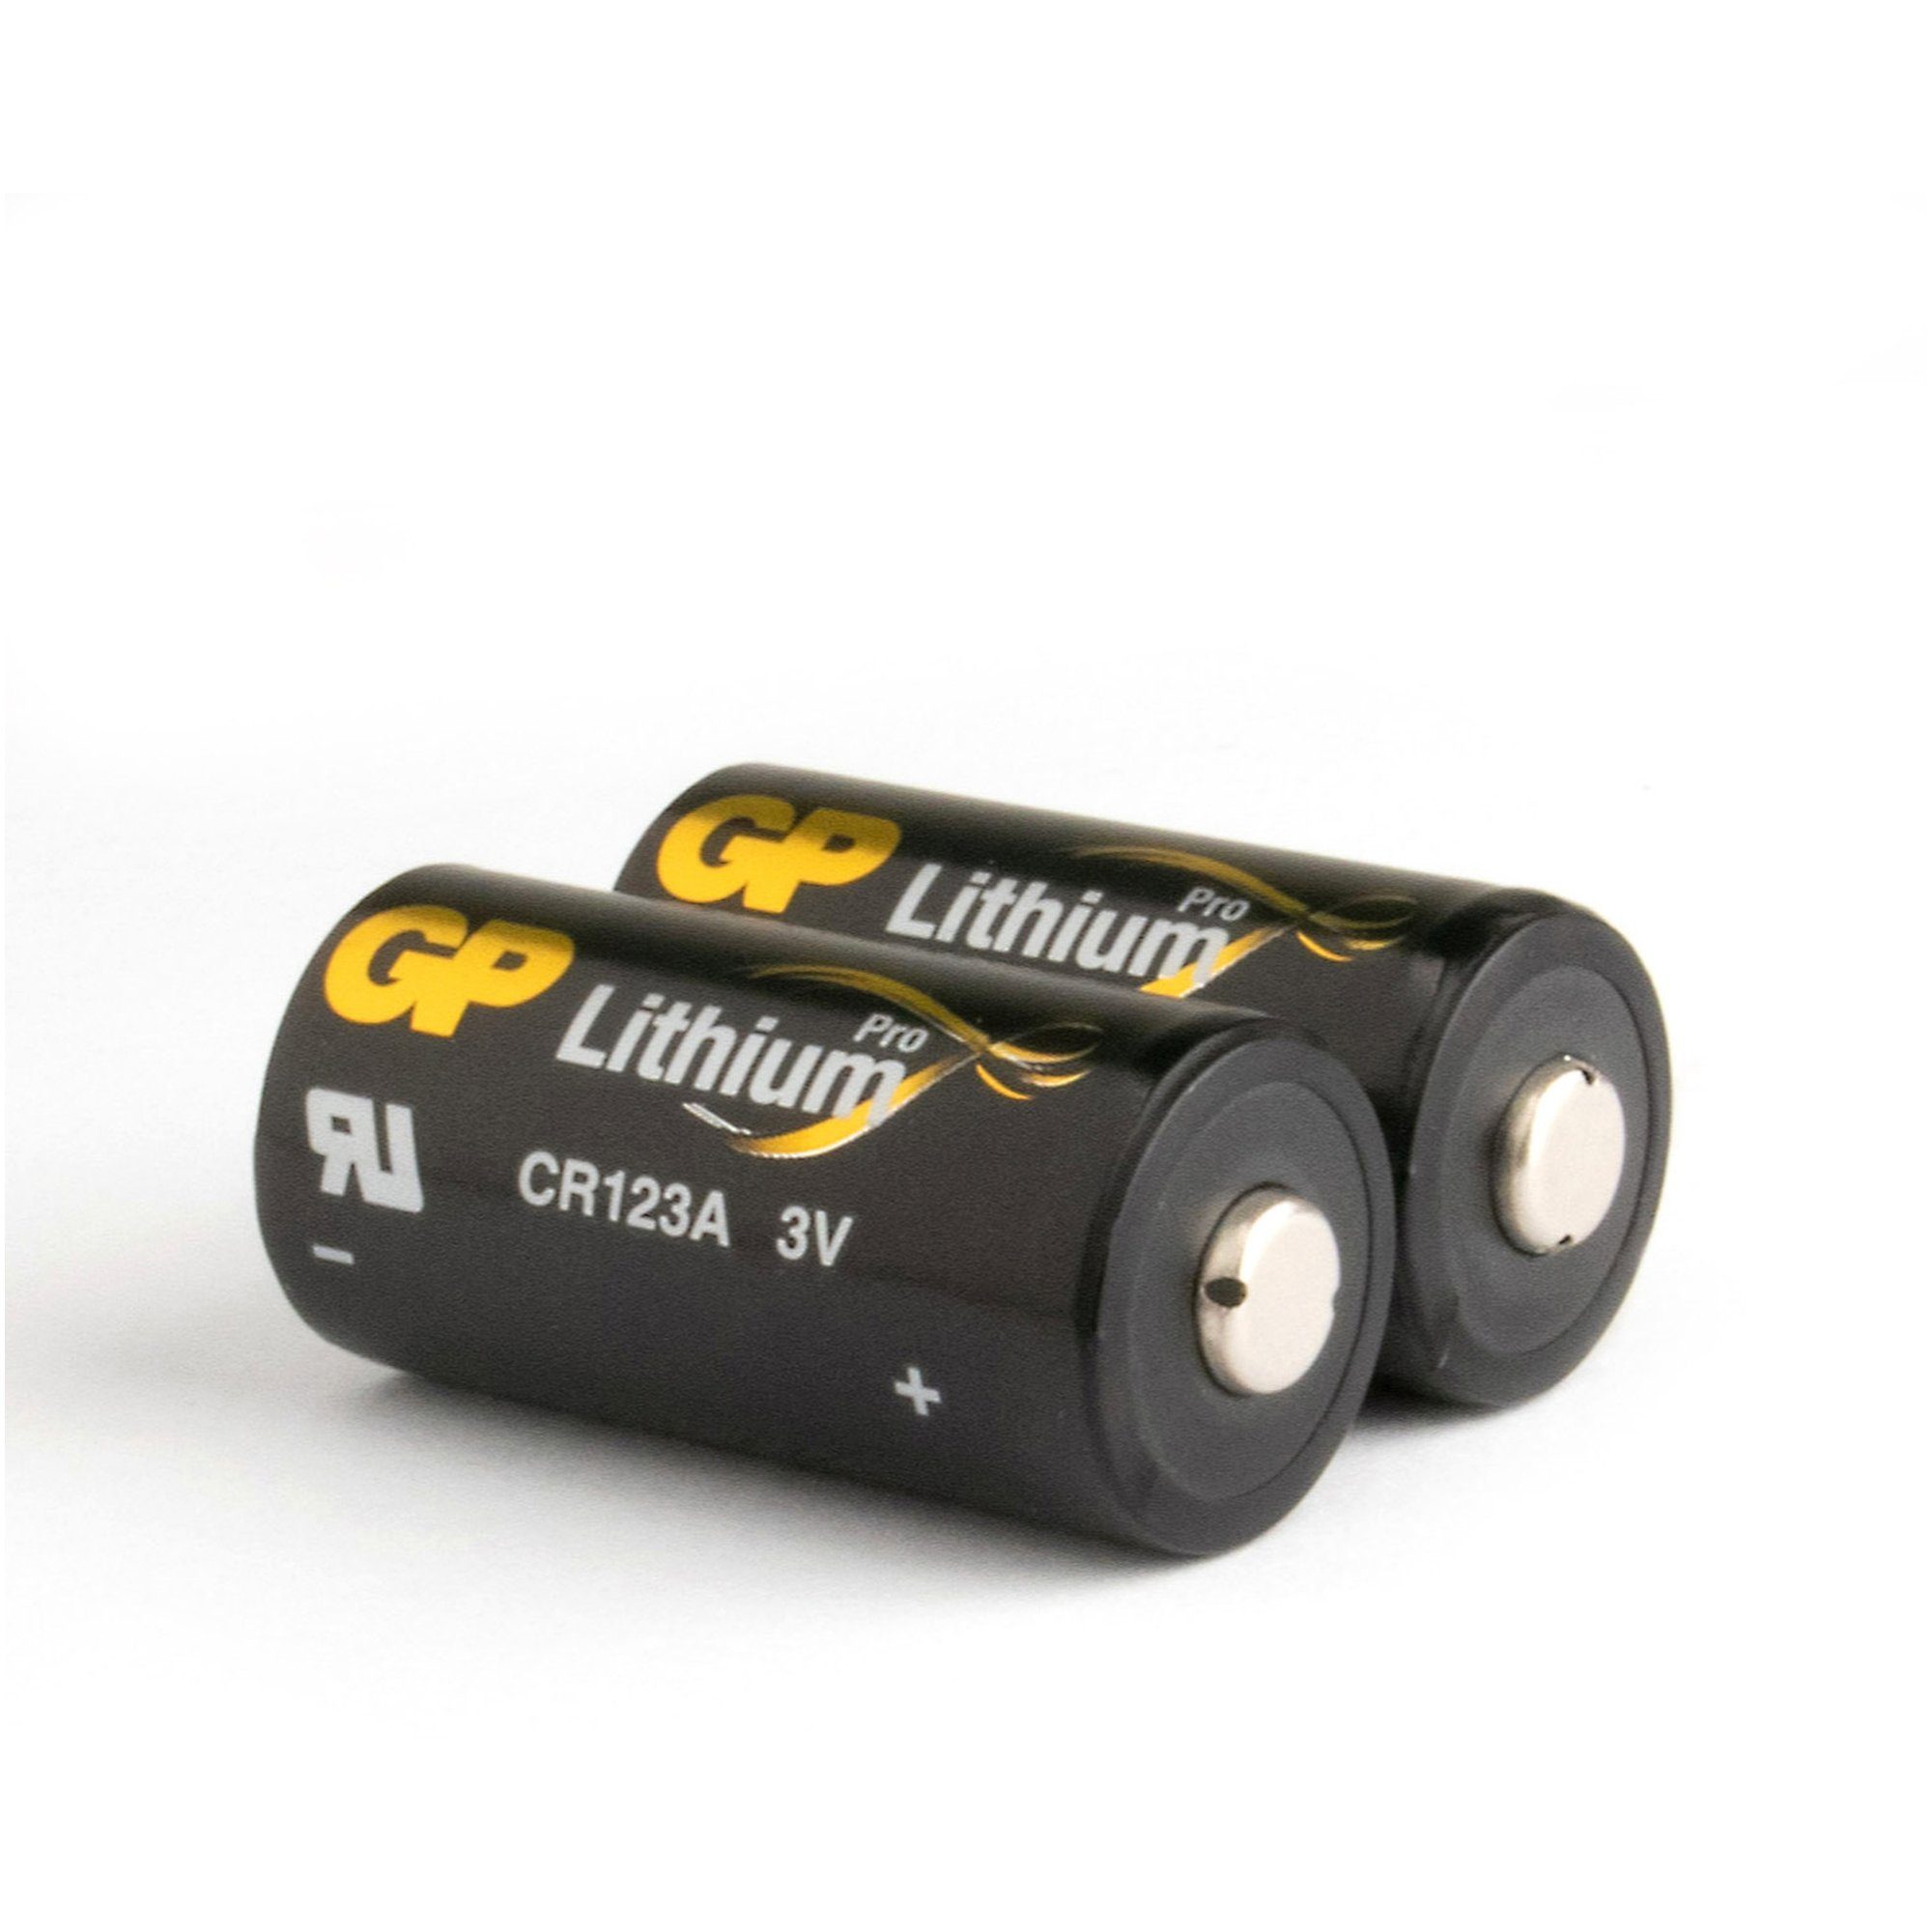 GP Batteries CR123A Batterie GP Lithium Pro 3V 2 Stück Batterie, (3,0 V)